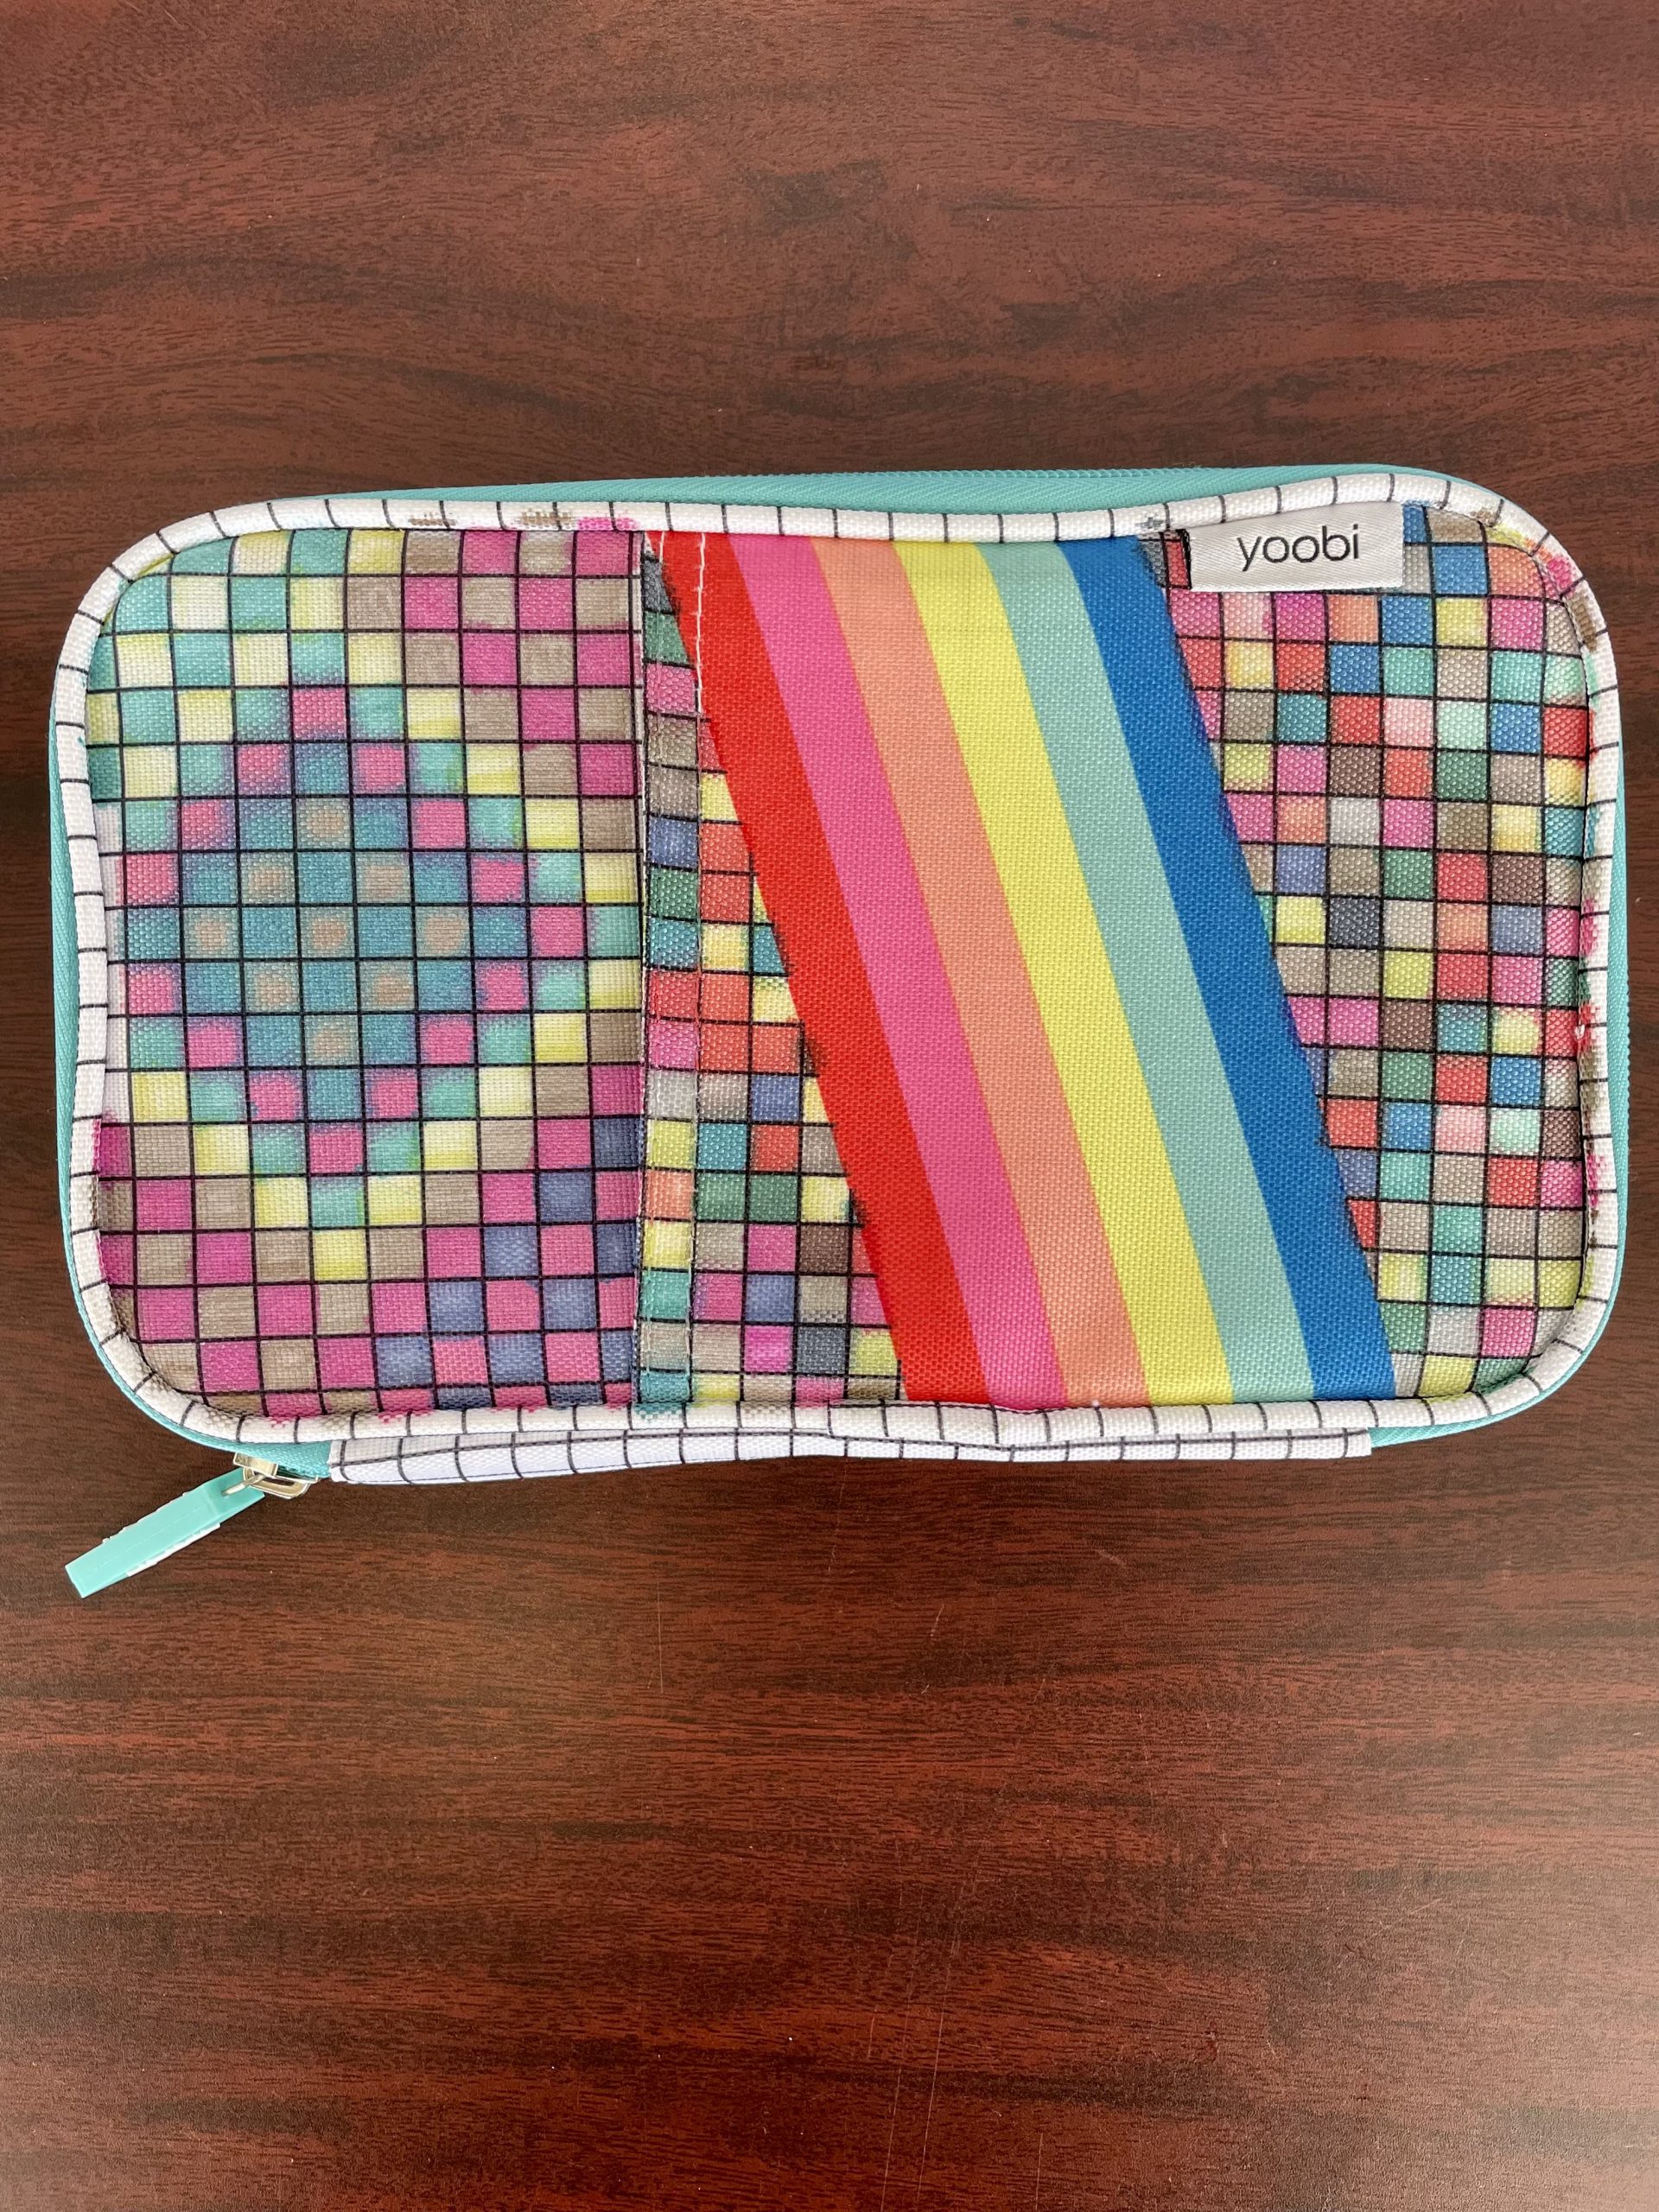 Yoobi Pink Pencil Organizer Case Pockets Great For The Classroom Homeschool  New